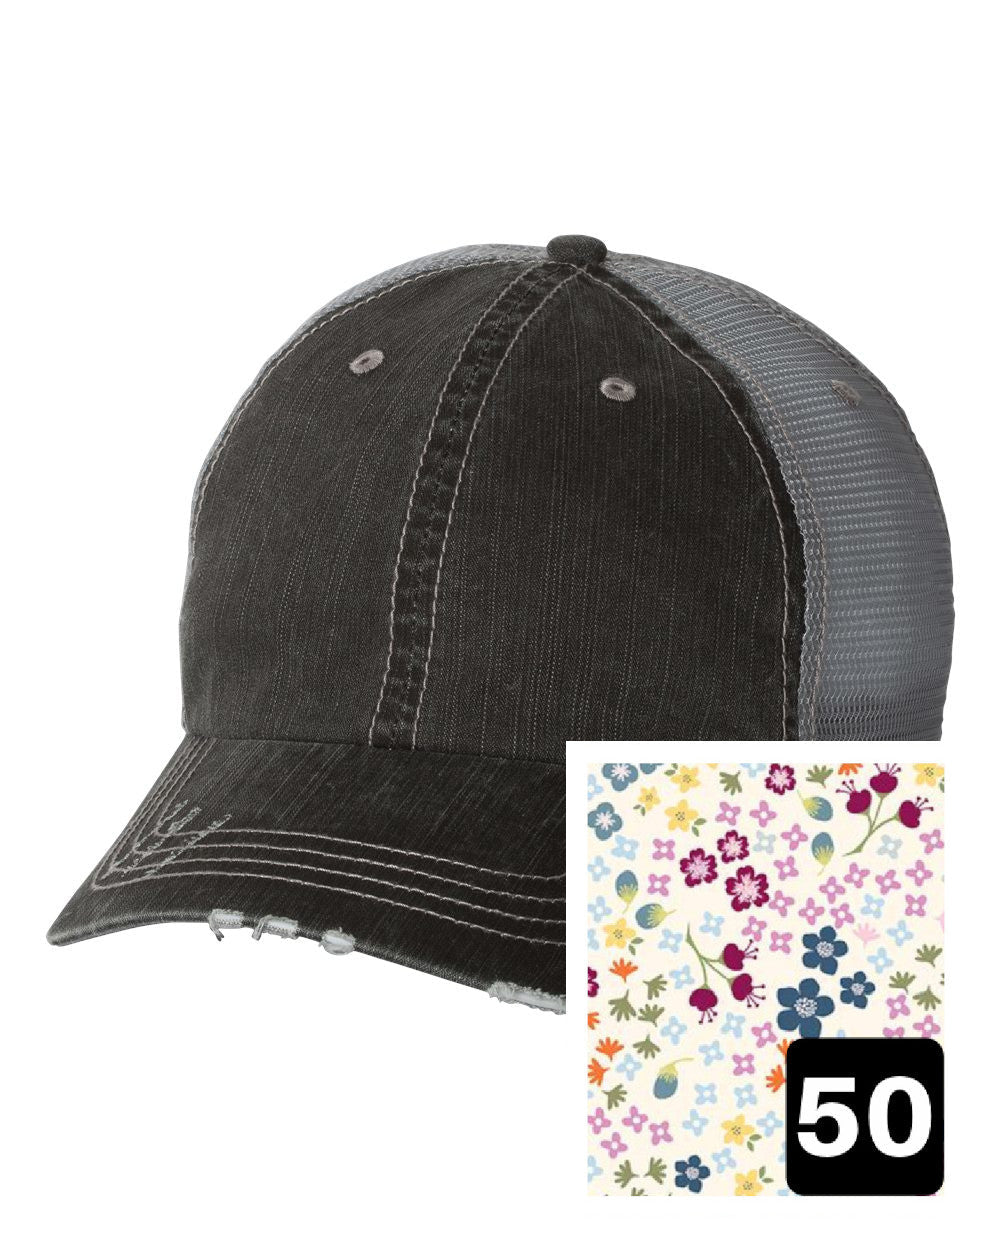 gray distressed trucker hat with gray geometric fabric state of South Dakota